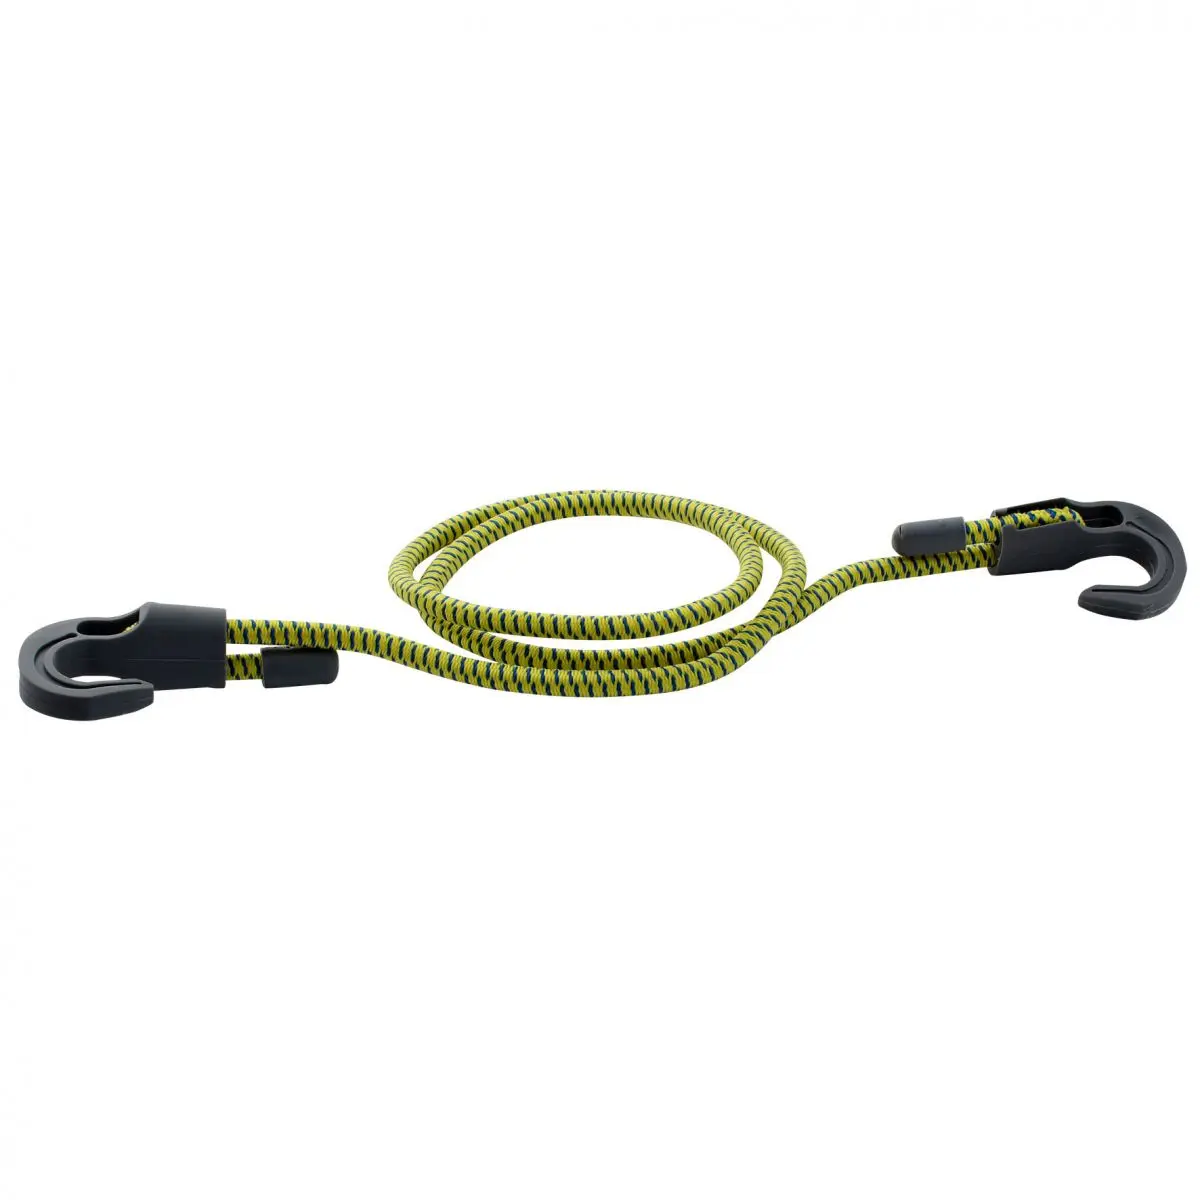 Cablu de tensionare Quick Fix cu cârlig - 1 buc